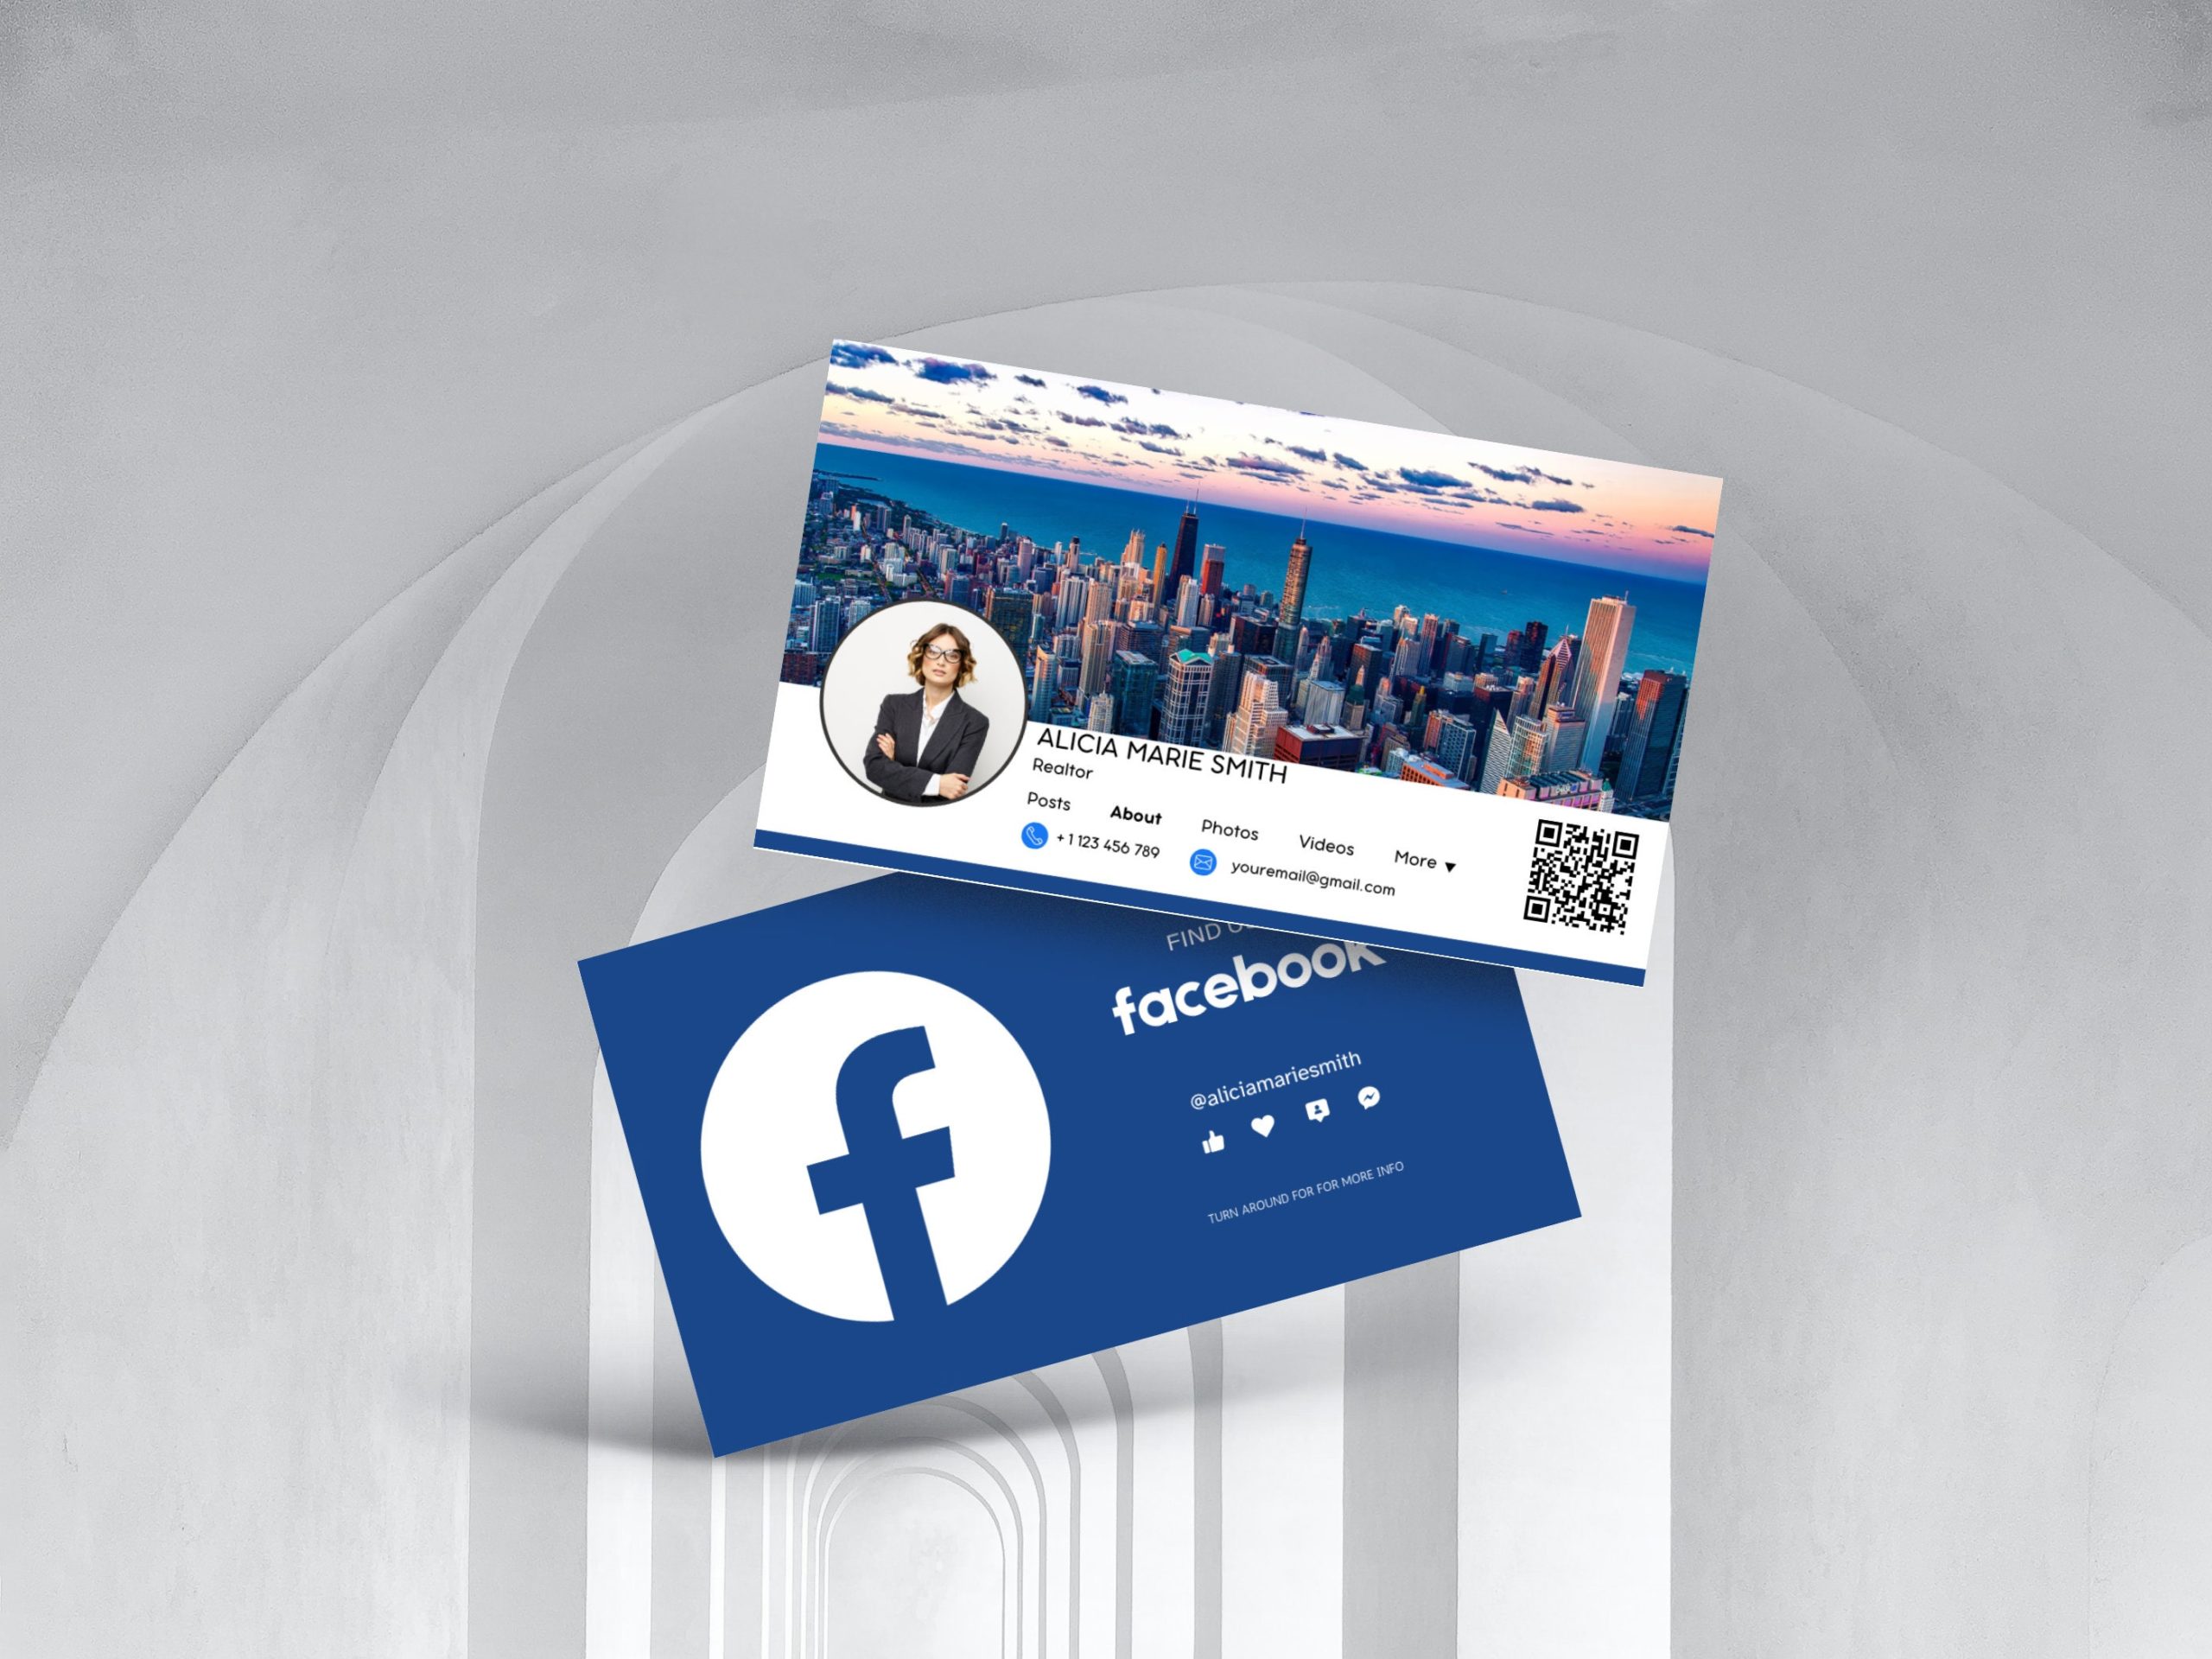 facebook and instagram logo for business cards 2